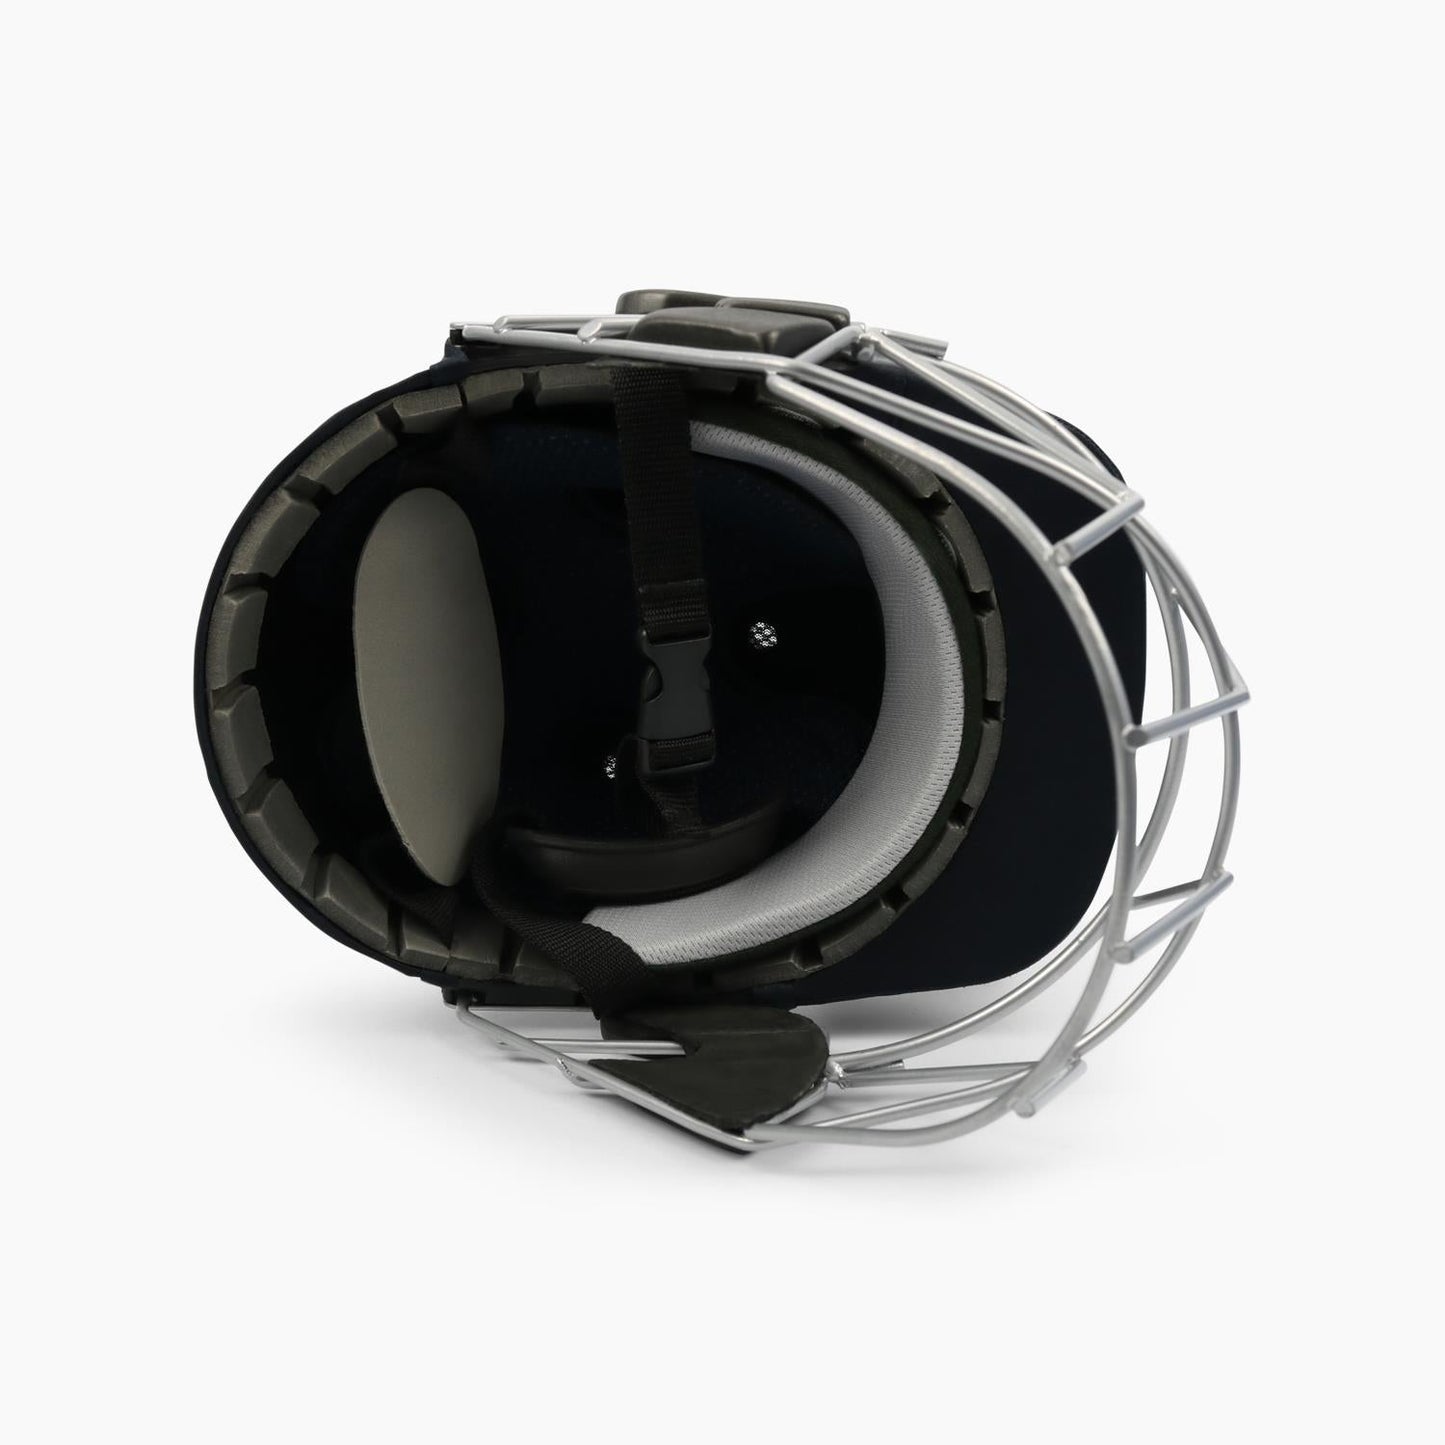 Buy Royal Cricket Helmet-Cricket Helmet-Splay-Medium-Splay UK Online